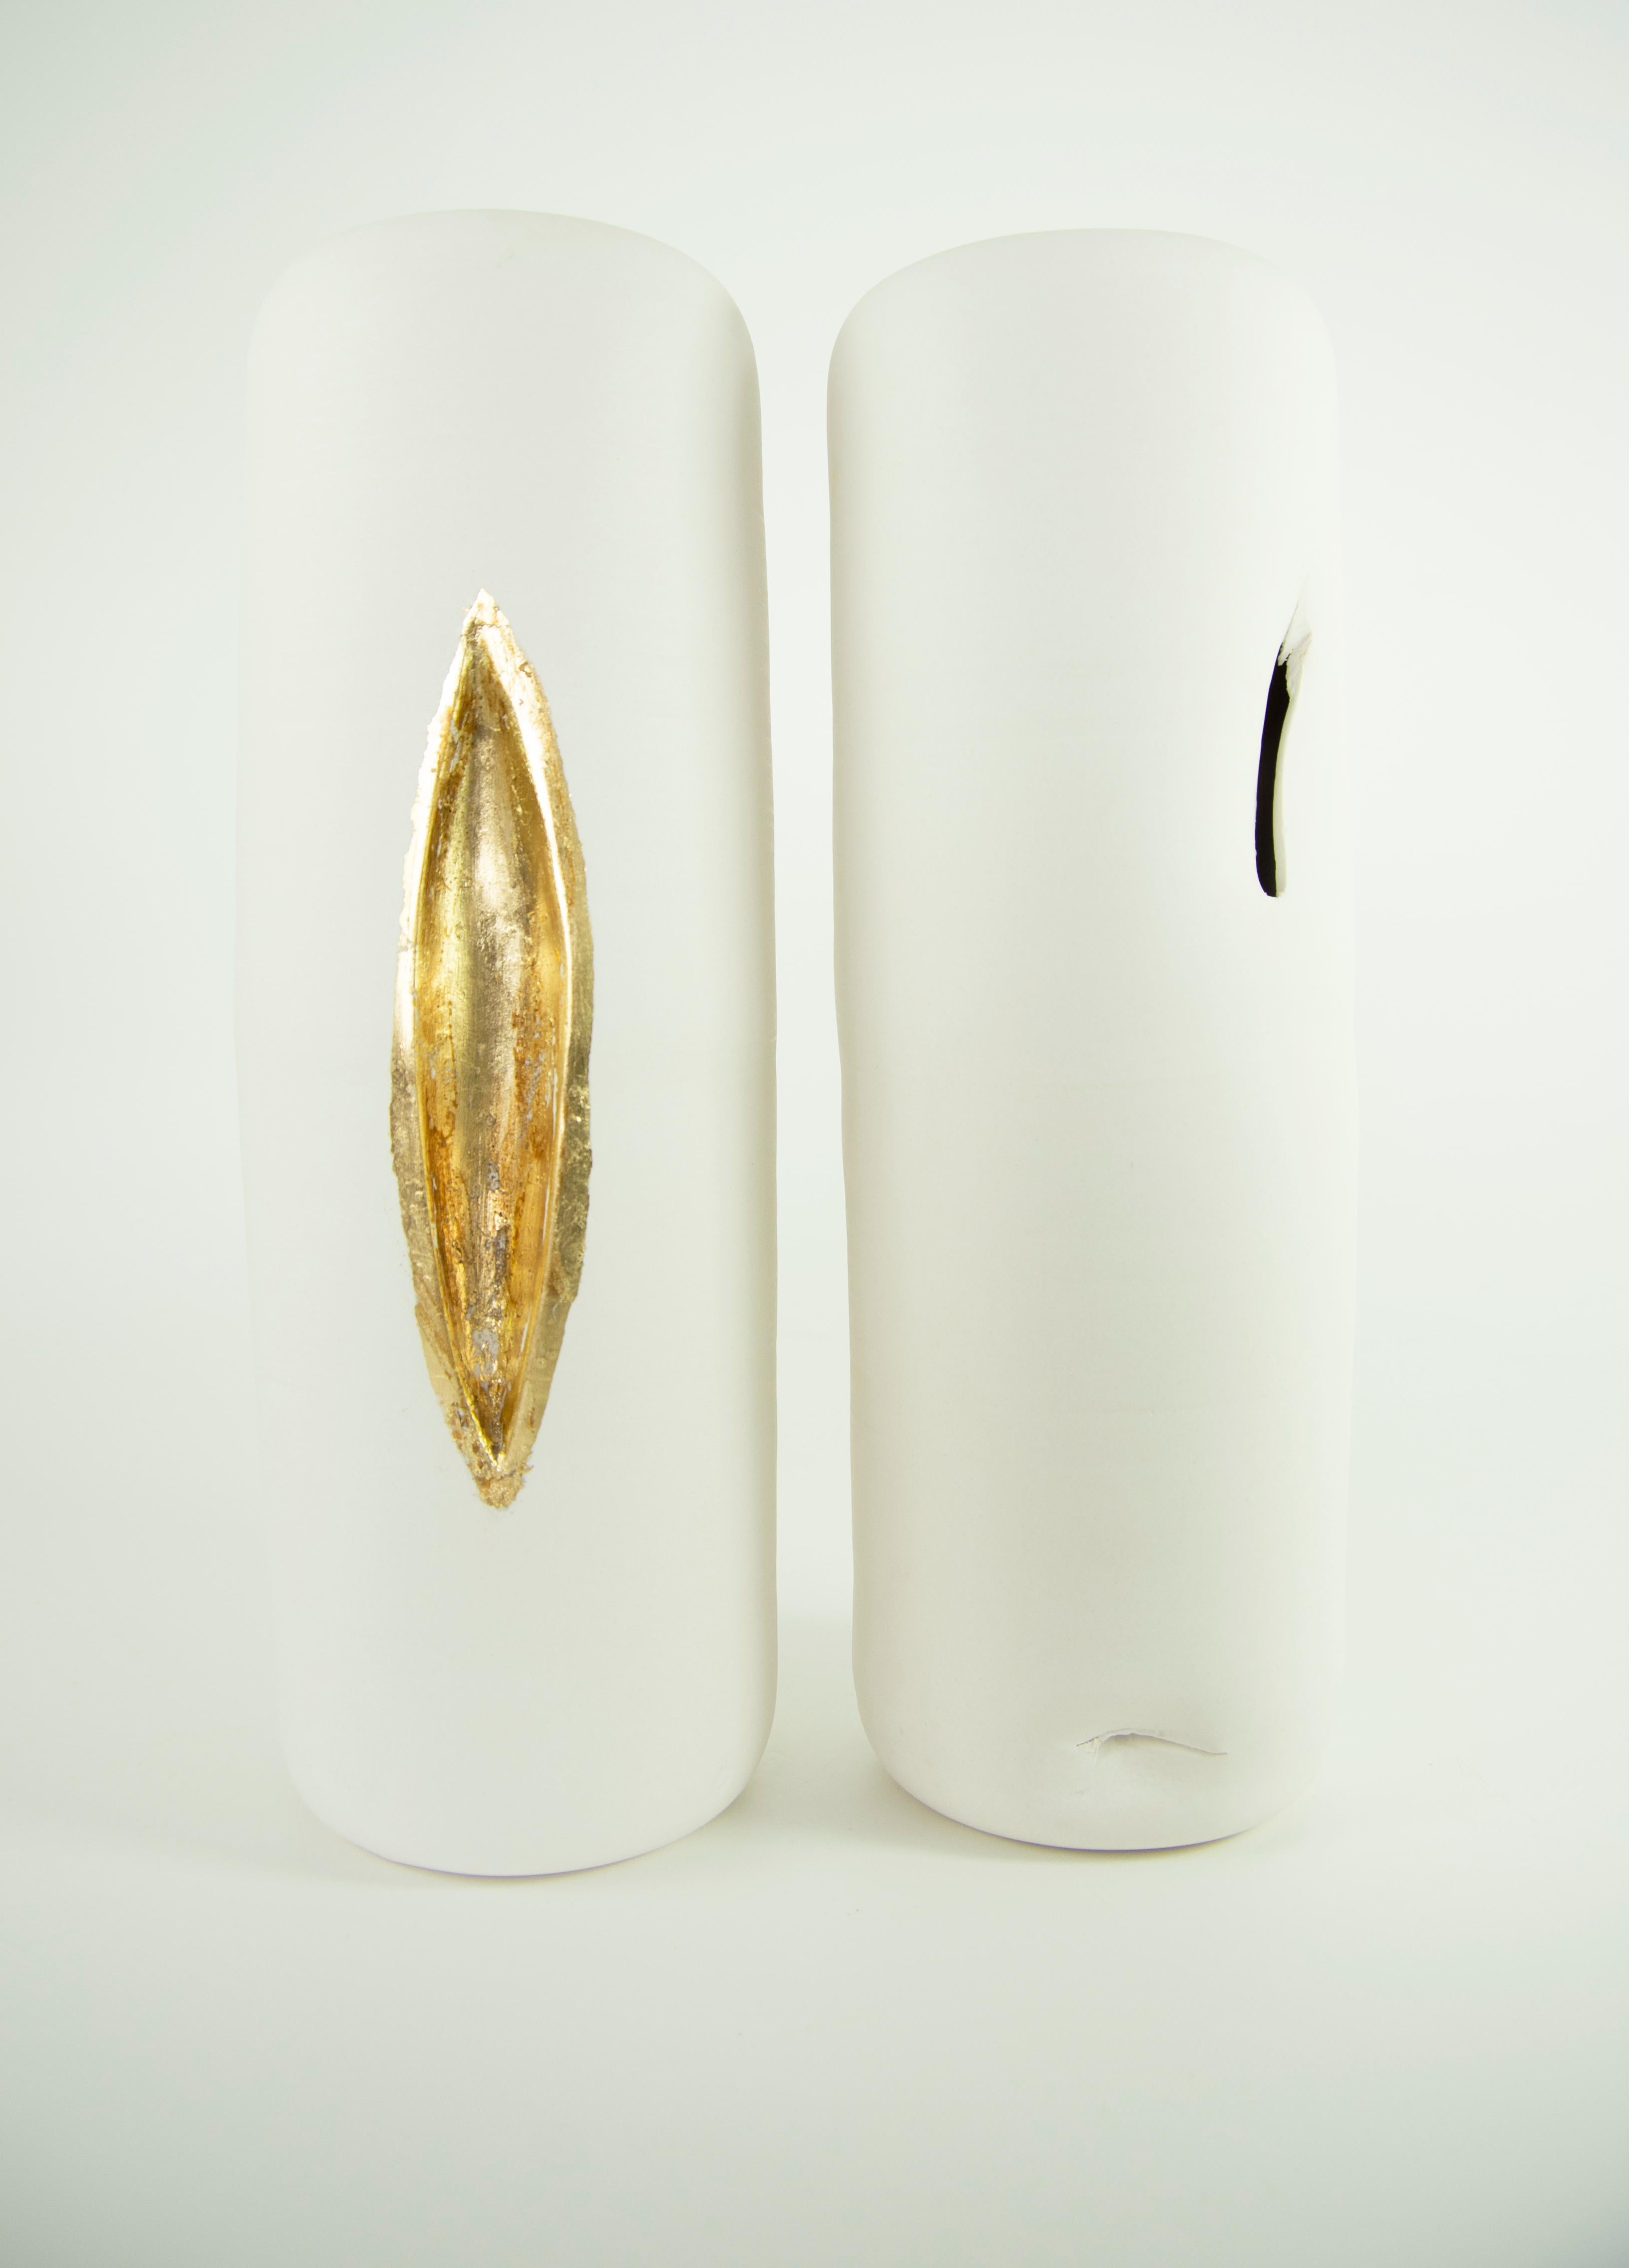 Other Volcano Gold Leaf Single Decorative Object by Dora Stanczel For Sale